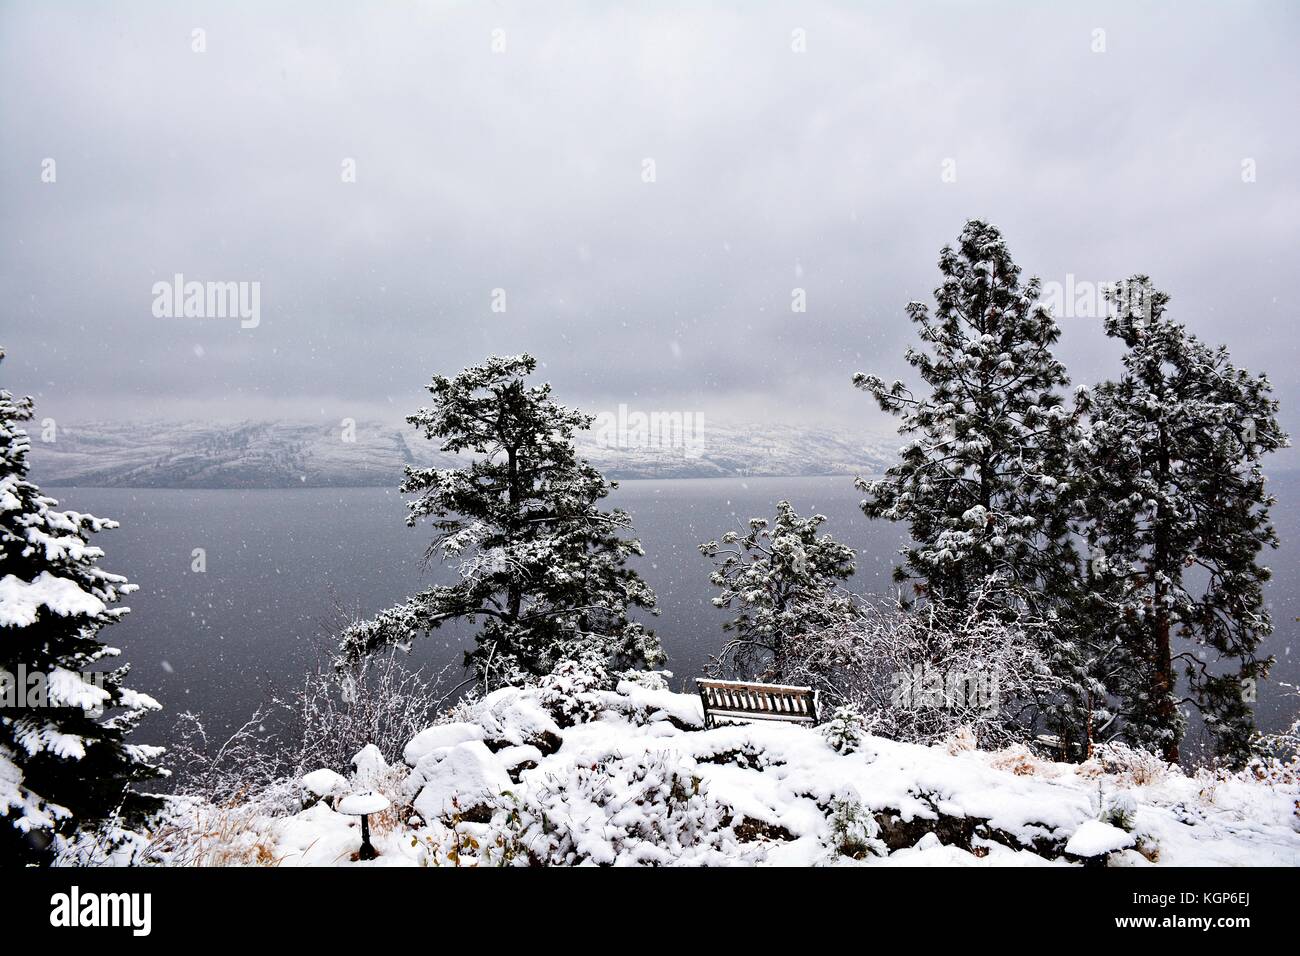 Snowing in Okanagan in November, Peachland, British Columbia Stock Photo